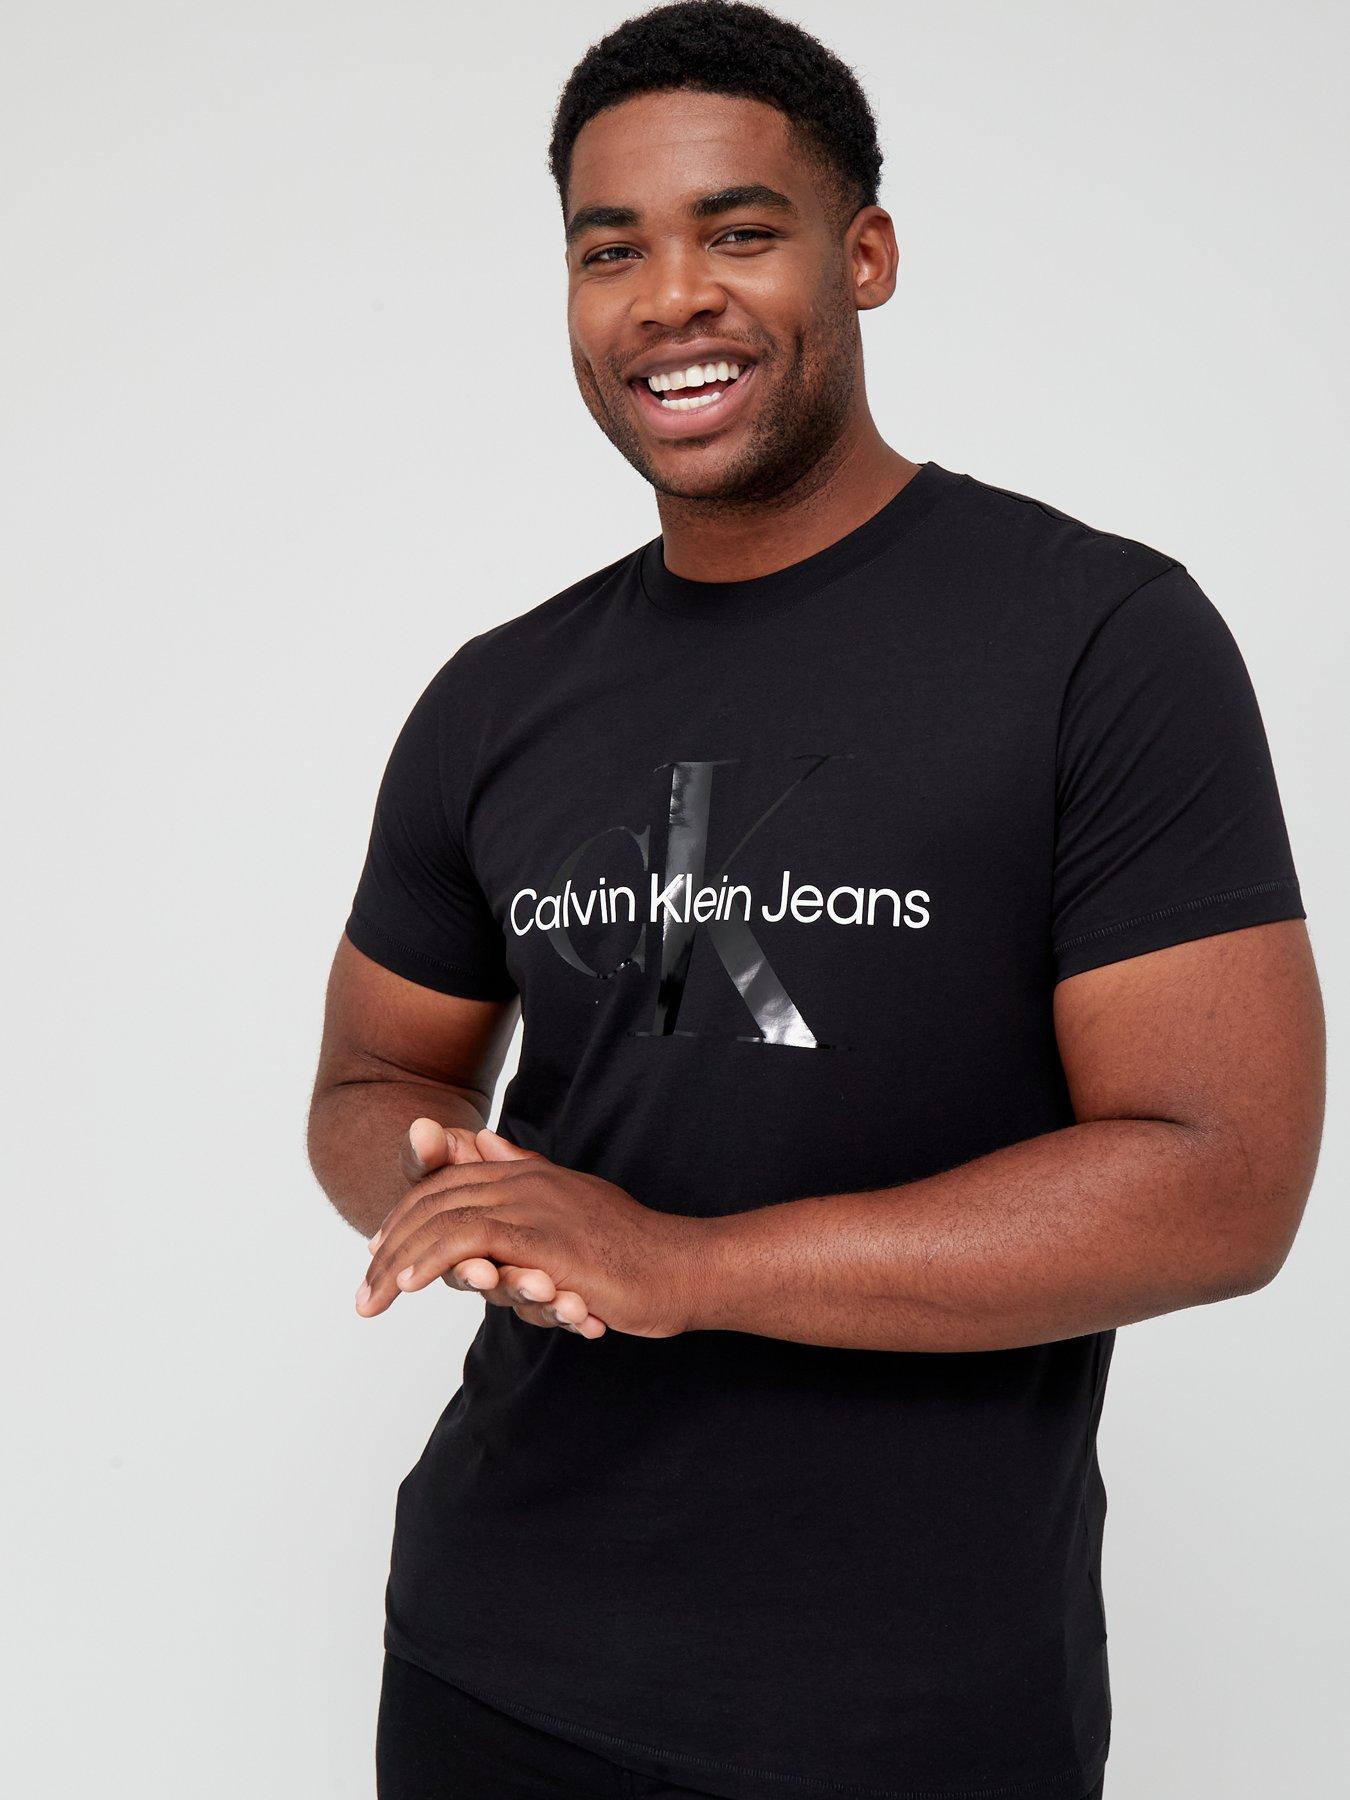 Black | Calvin klein jeans | T-shirts & polos | Men 